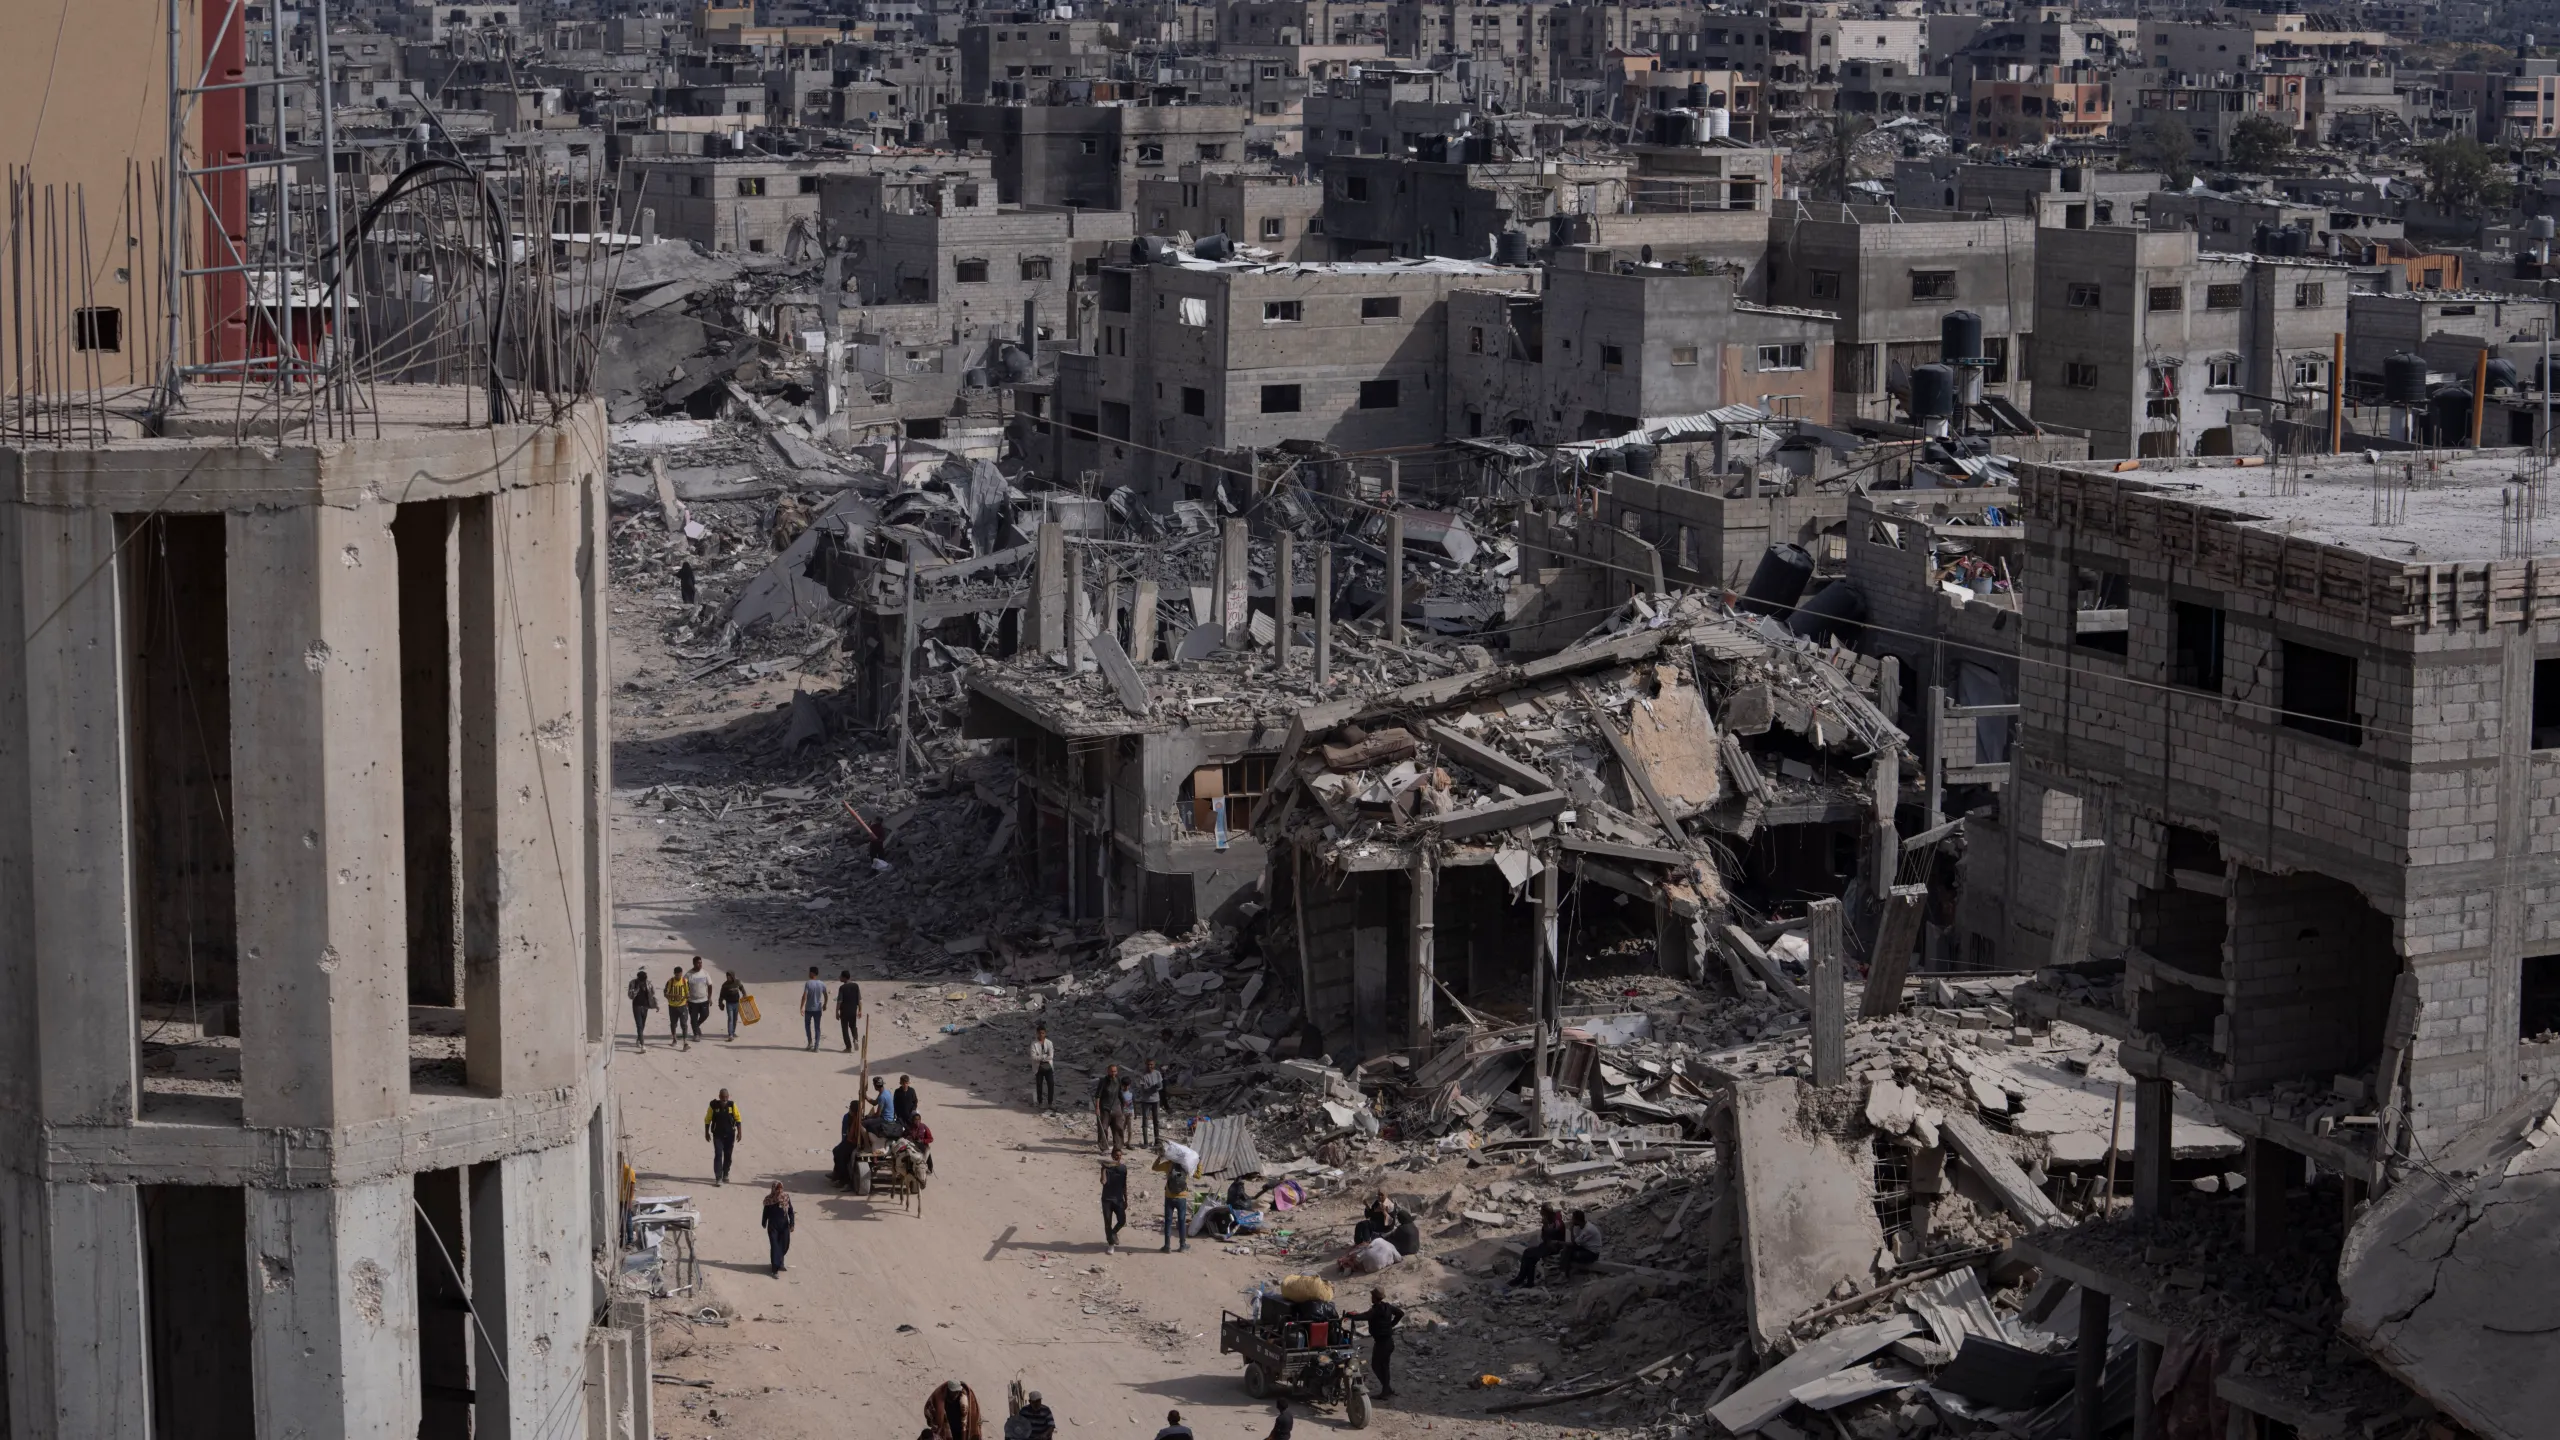 Khan Younis Devastation: Palestinians Return After Israeli Withdrawal